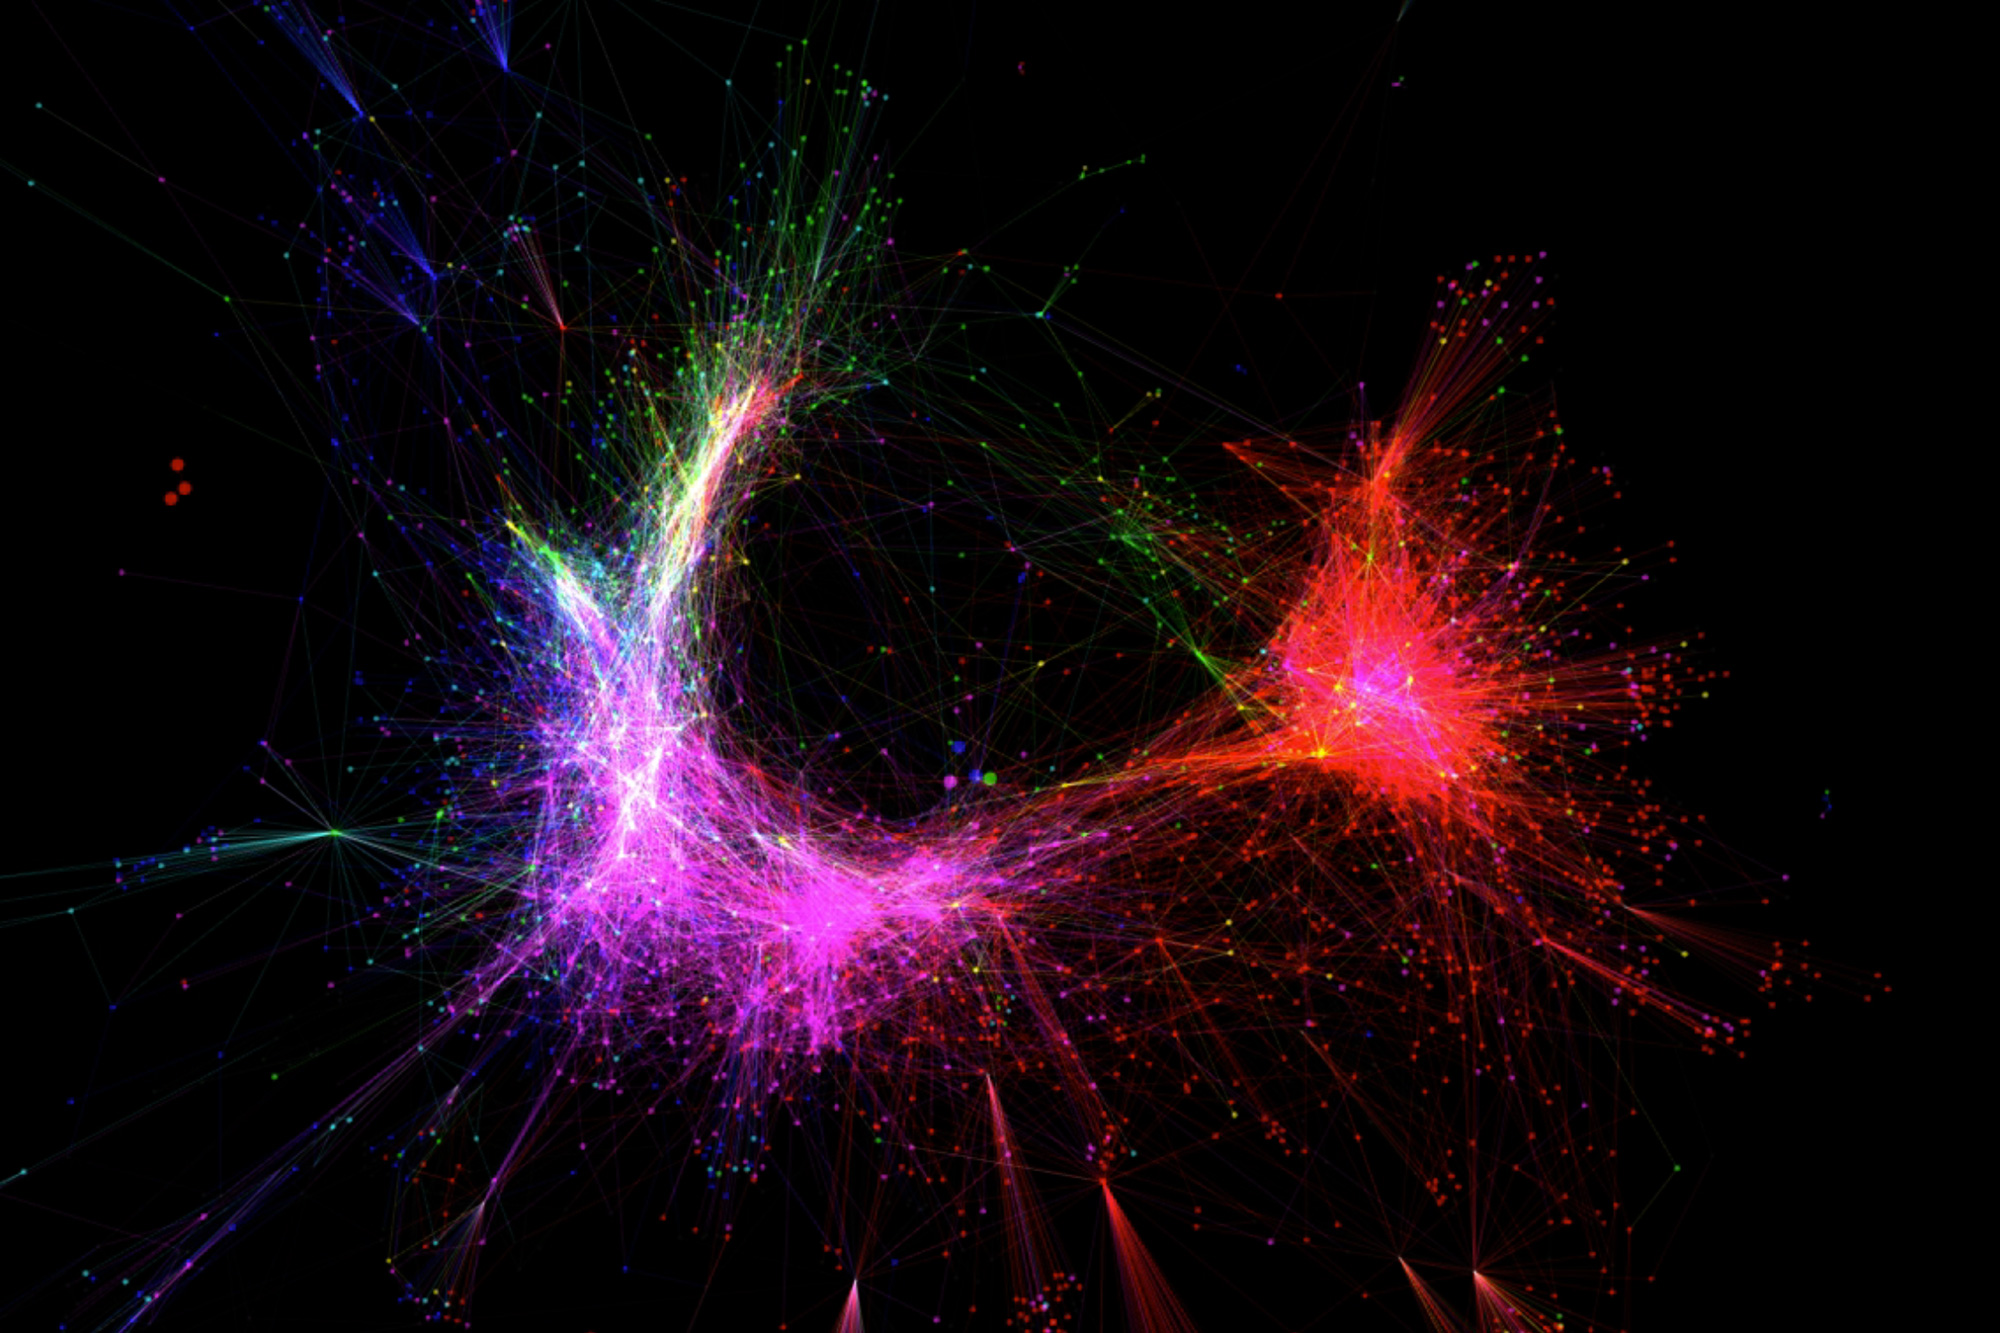 Colorful weblike data visualization depicting social network fragmentation and polarization